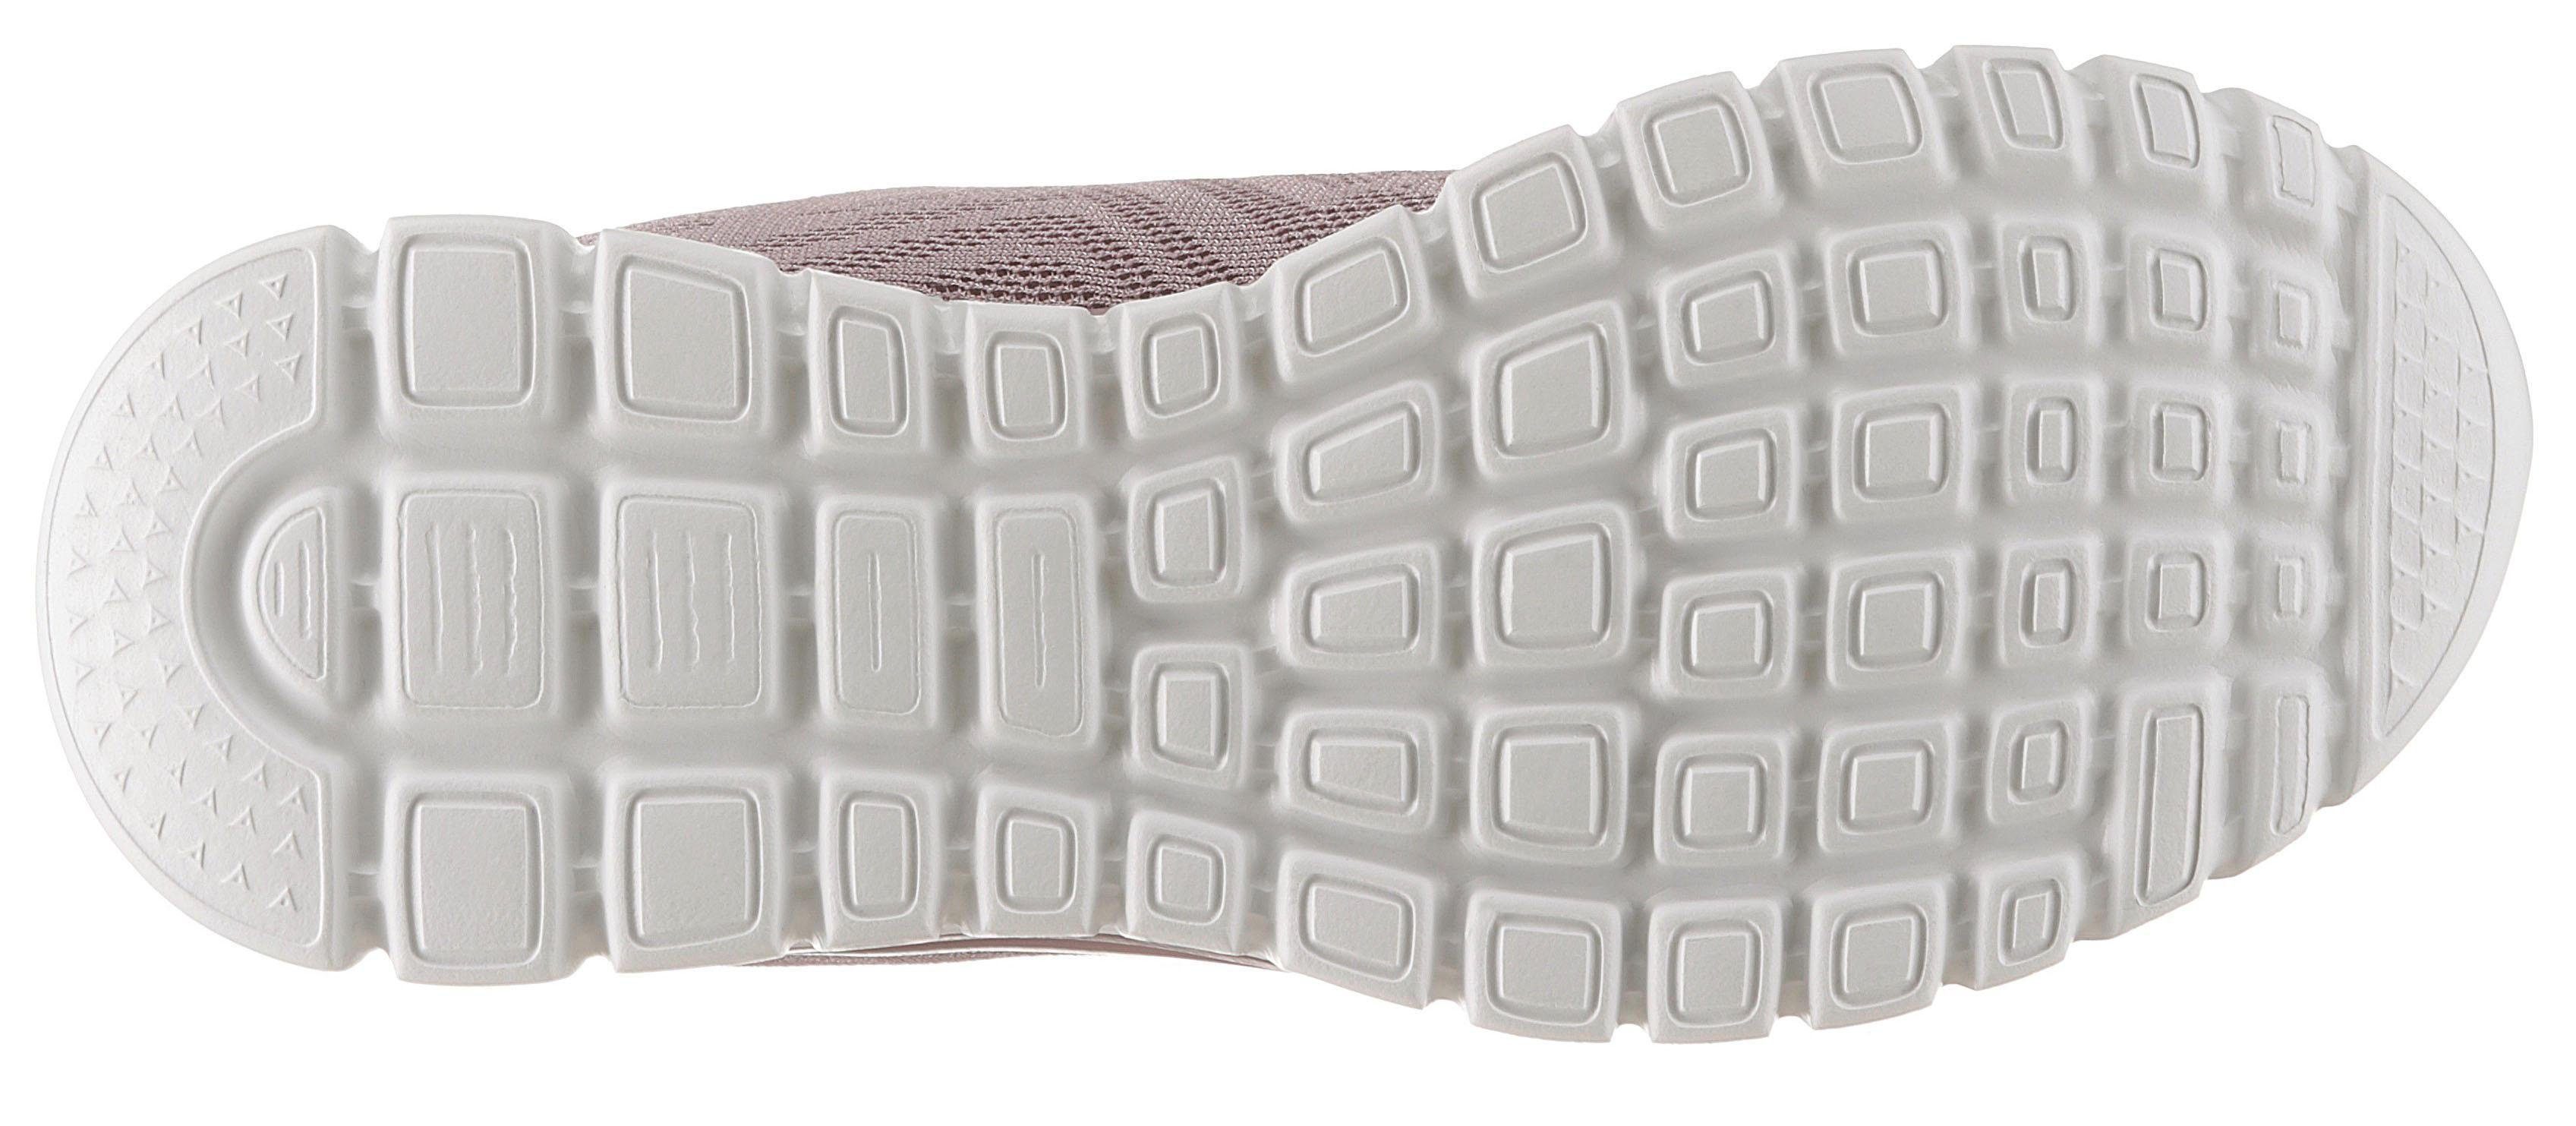 Skechers Graceful - Memory Get lavendel Connected Sneaker Dämpfung durch Foam mit